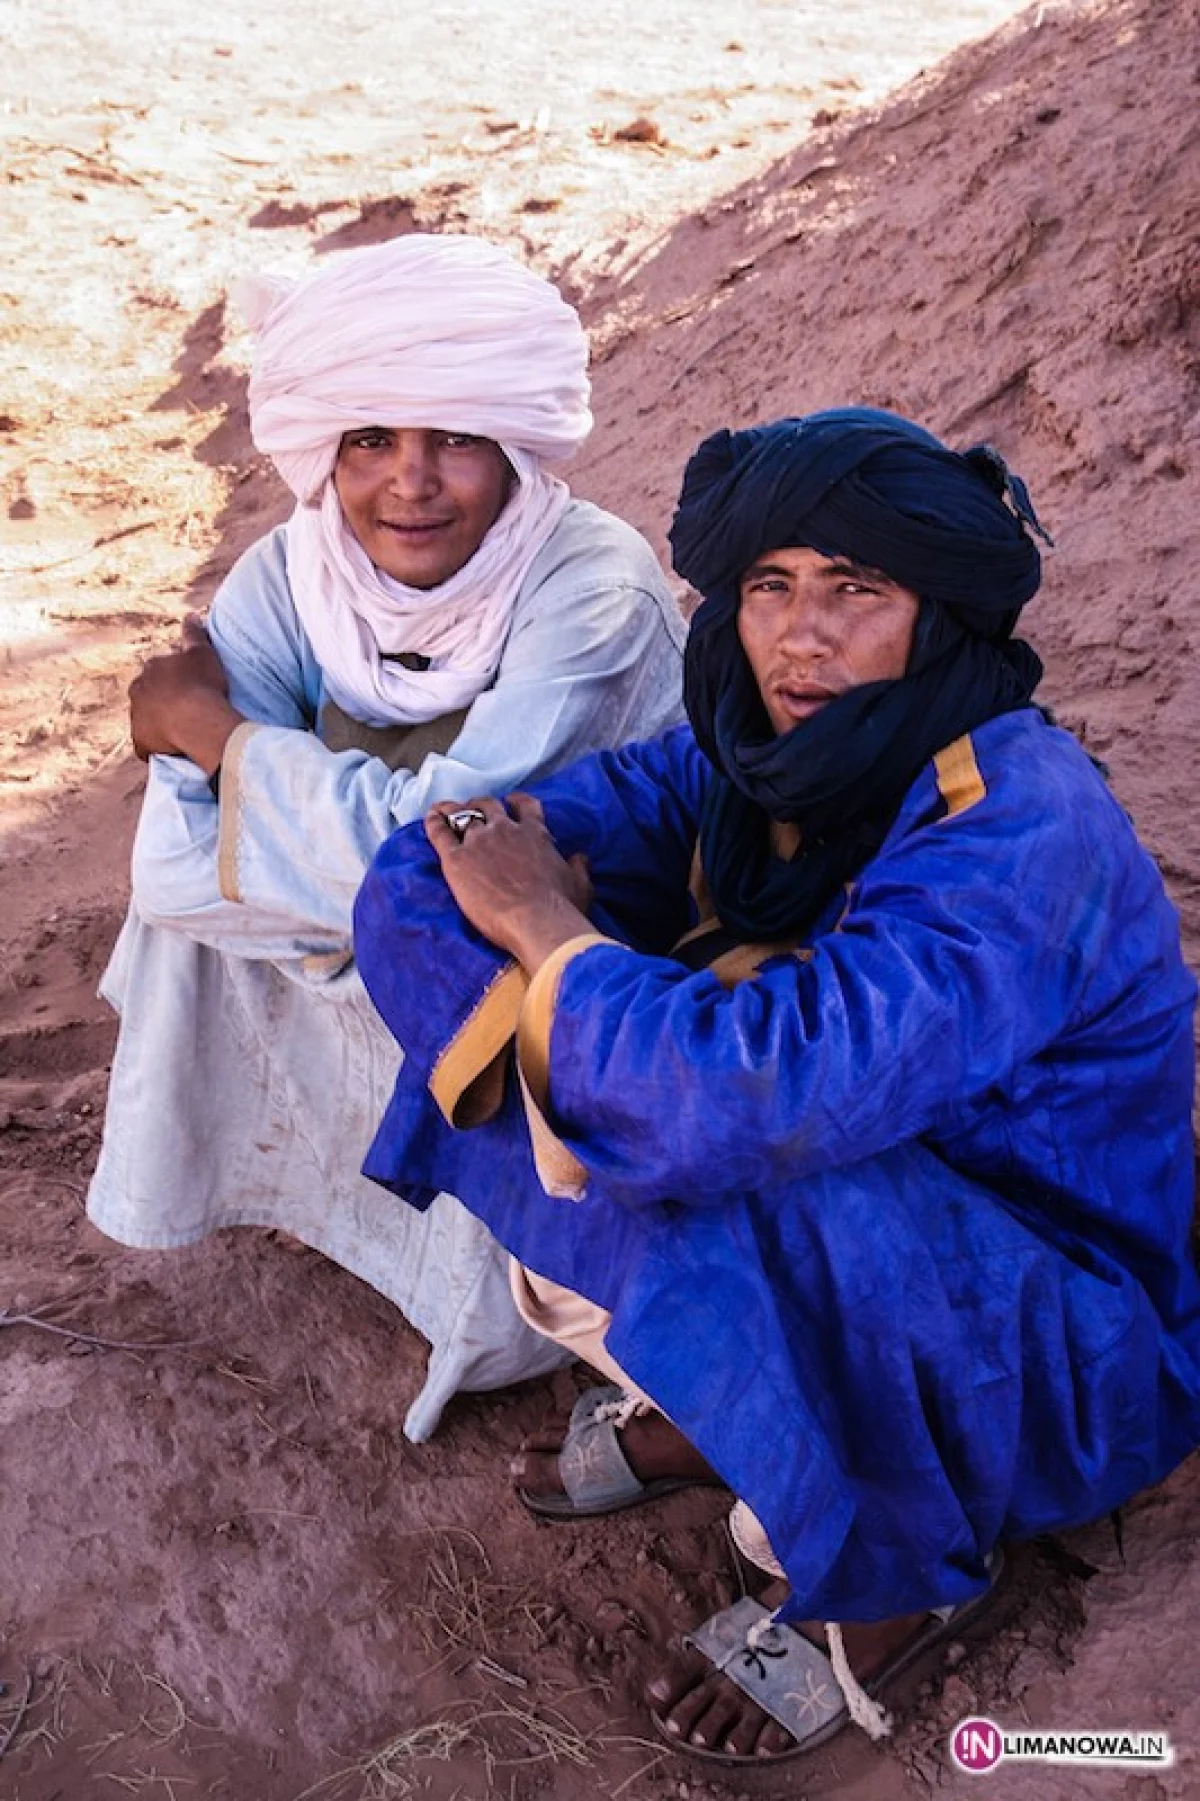 'Podróże dalekie i bliskie' - Maroko